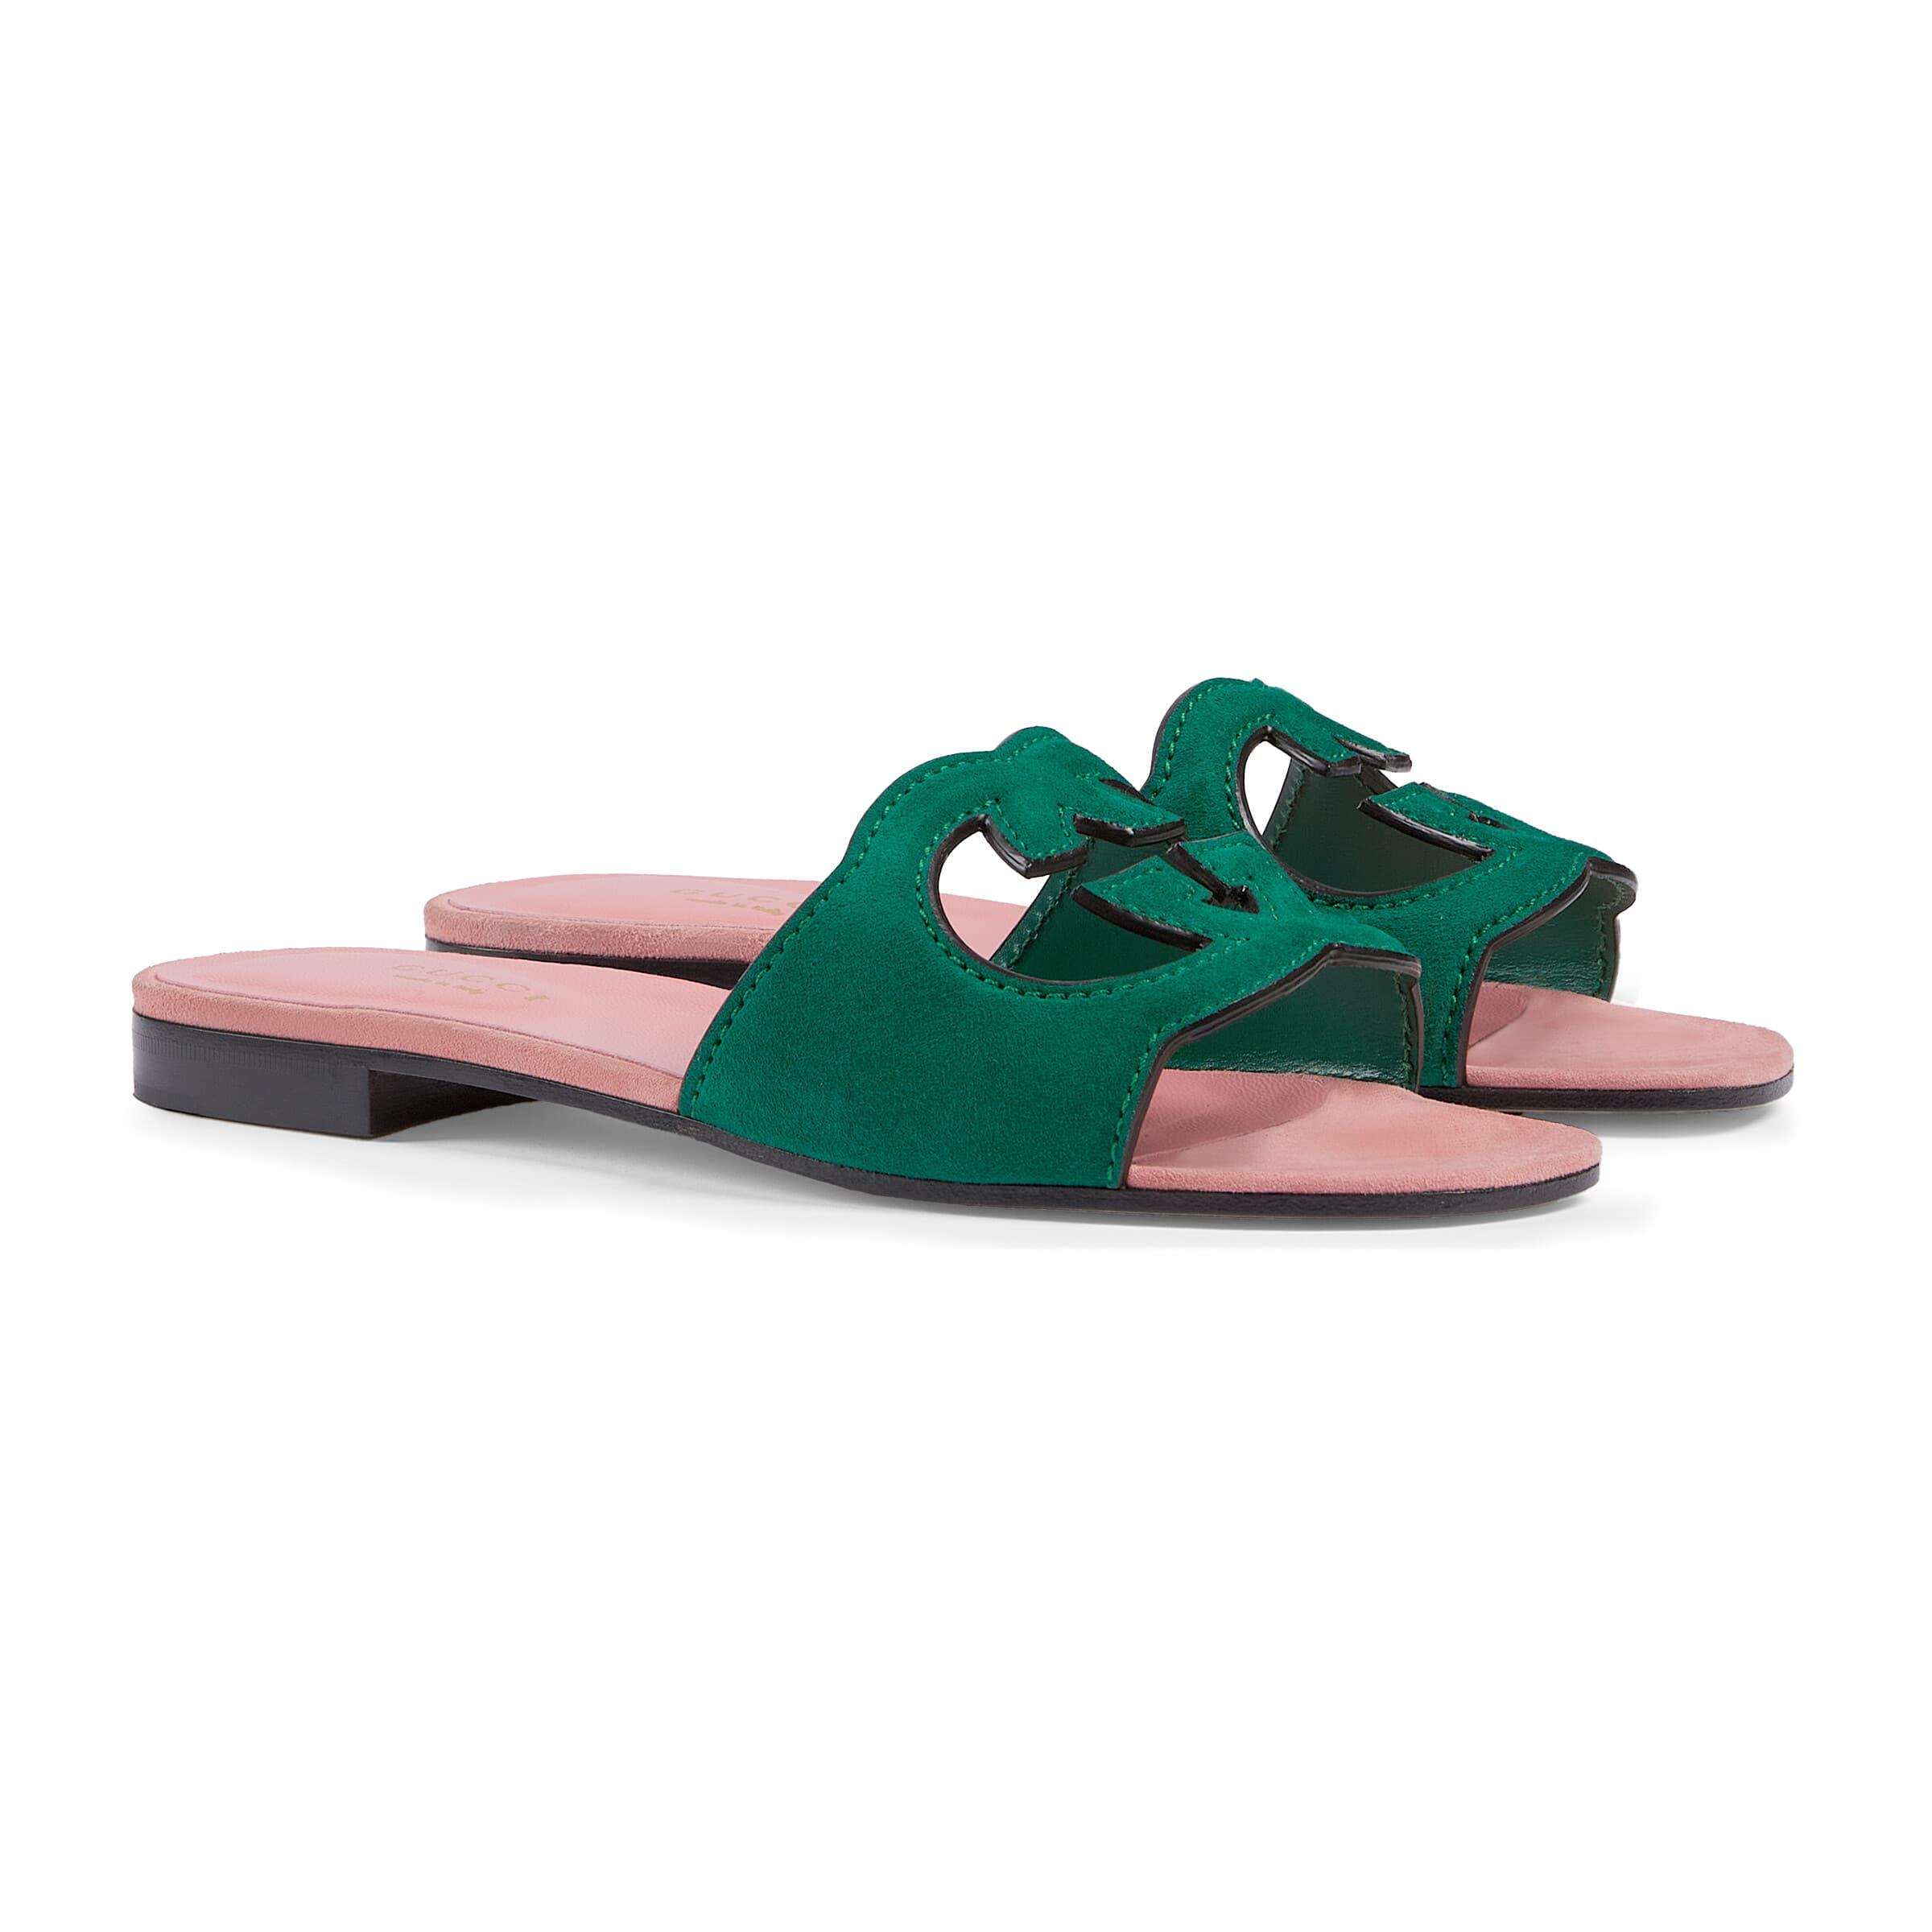 Gucci Interlocking G Cut-out Slide Sandal in Green | Lyst